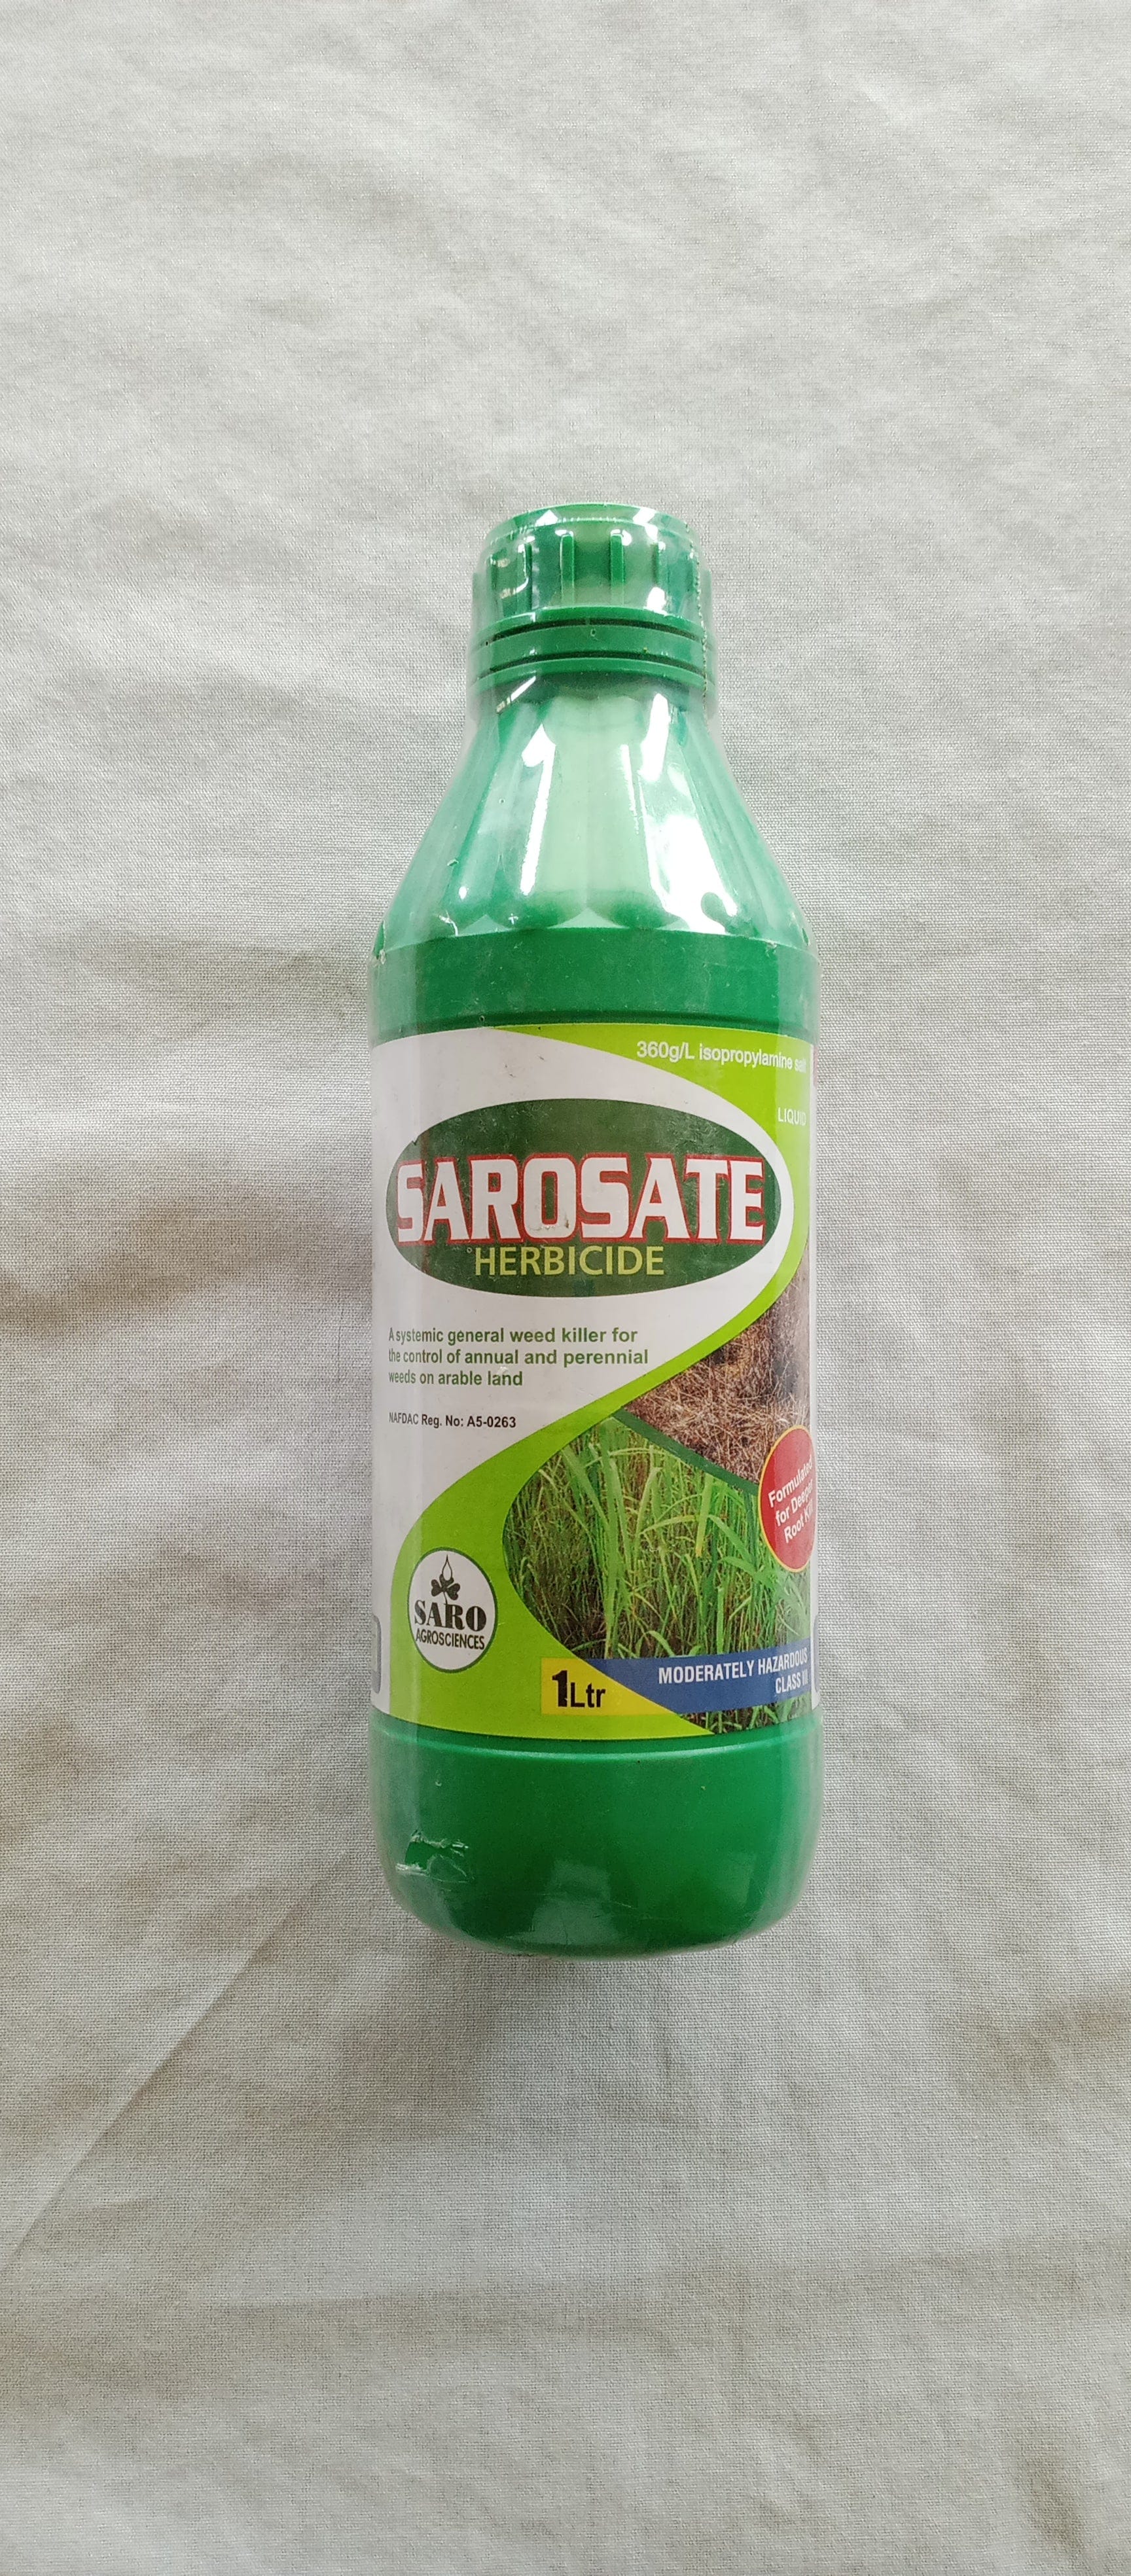 Glyphosate Herbicides Agro-toolz Sarosate